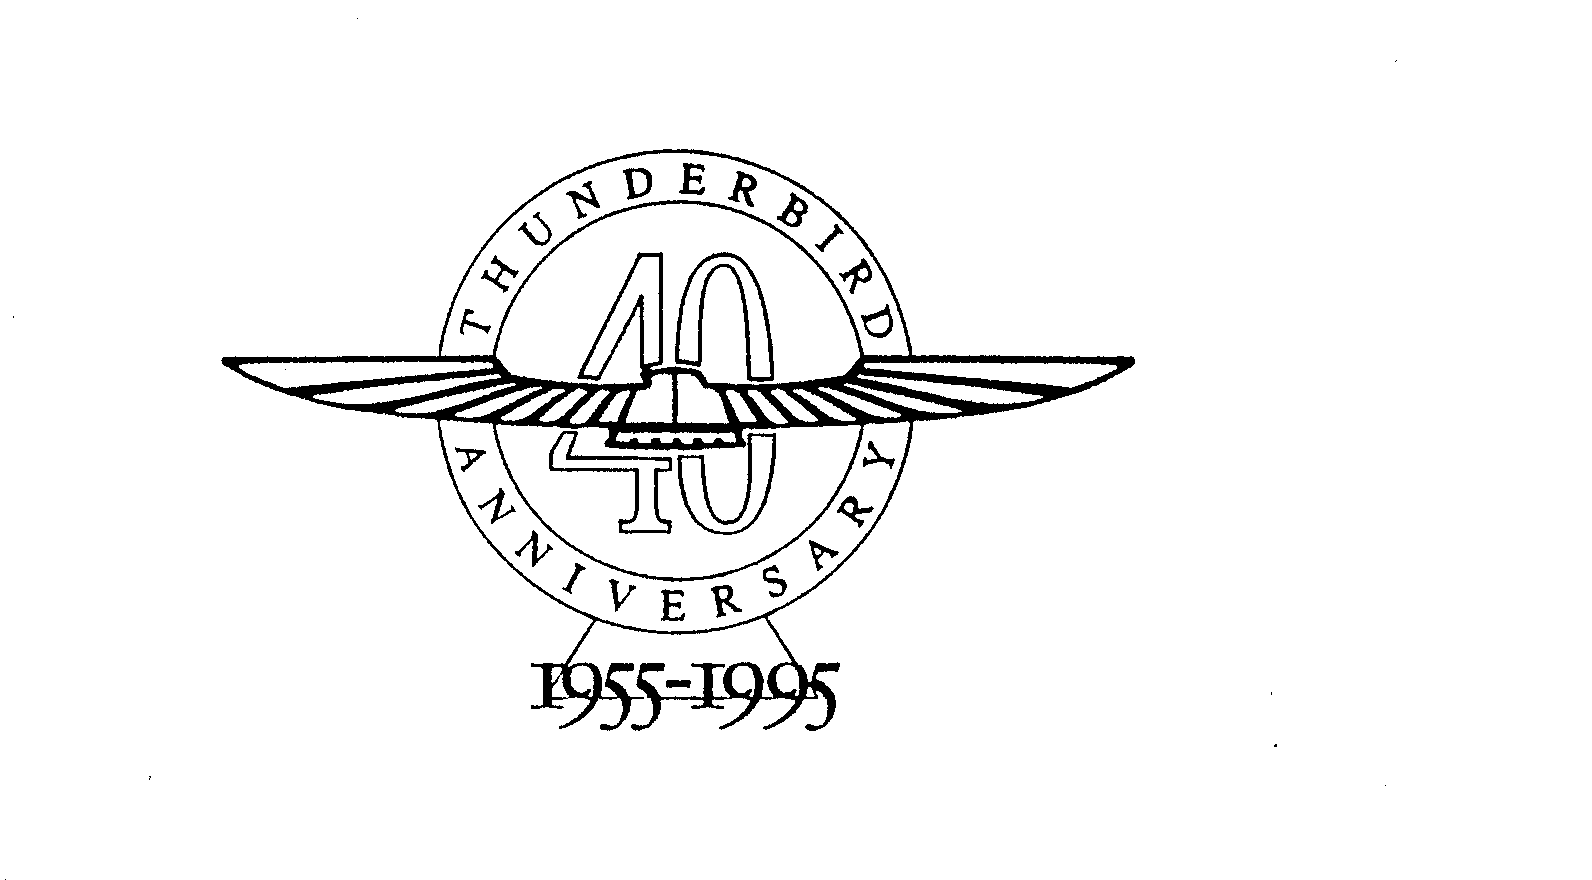 40 THUNDERBIRD ANNIVERSARY 1955-1995